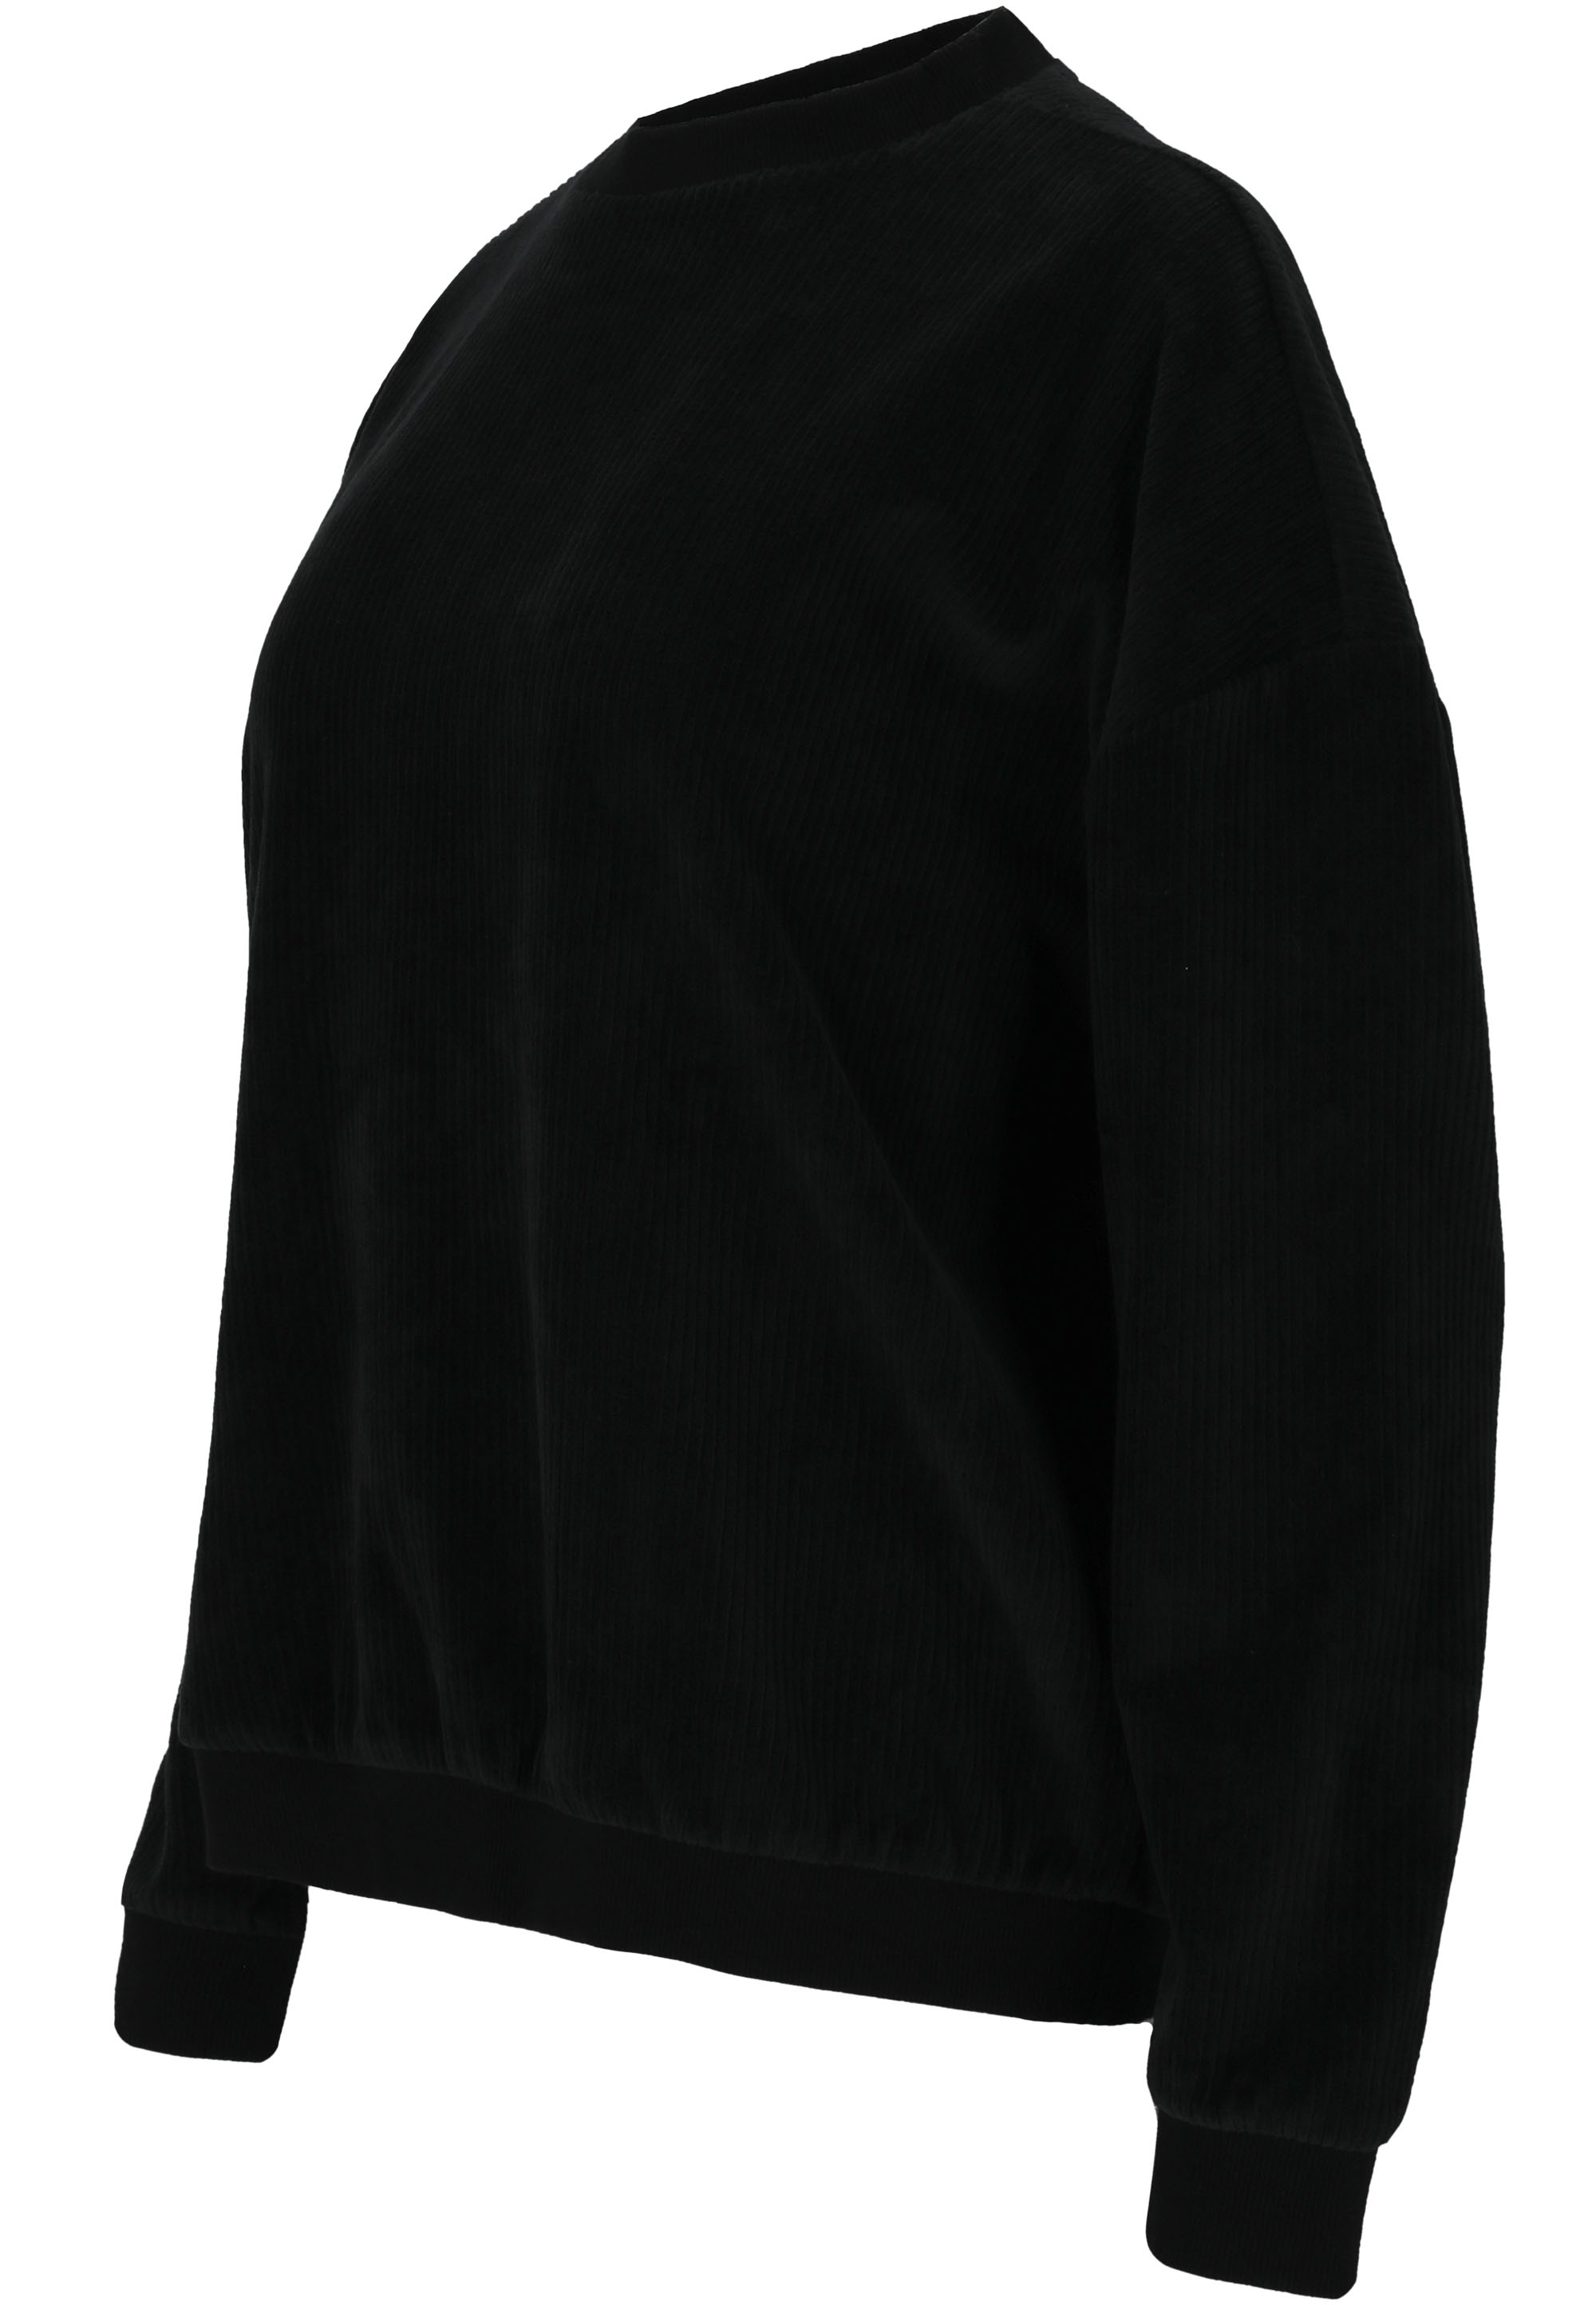 ATHLECIA Sweatshirt »Marlie«, im trendigen Cord-Look